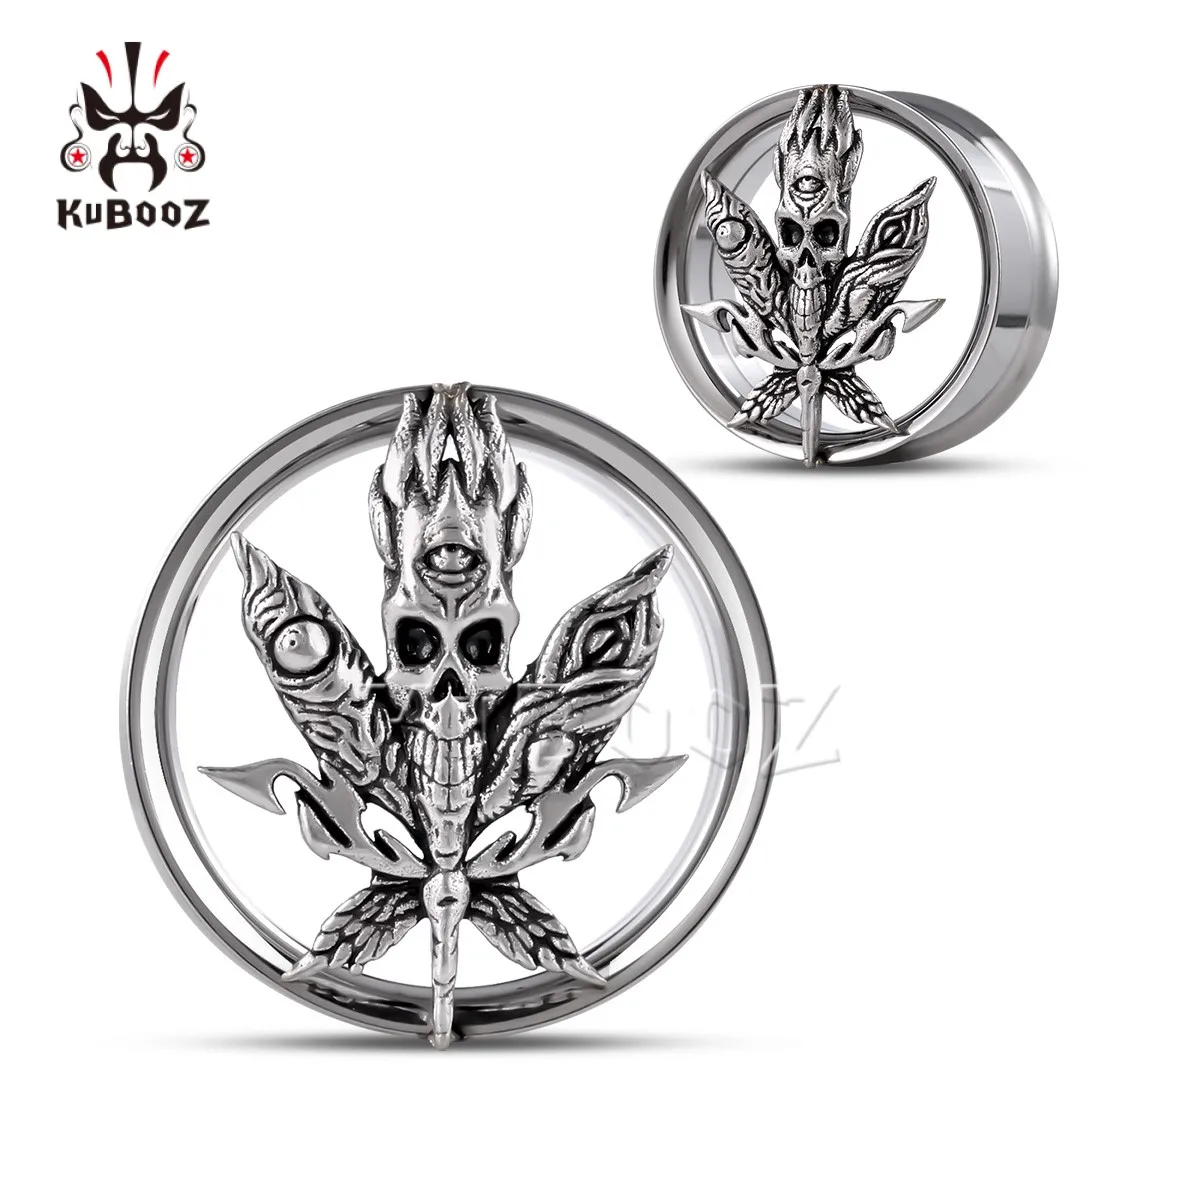 

KUBOOZ Leaf Ear Tunnels Expander Plugs Gauges Stretchers Stainless Steel Earrings Piercing Jewelry 2PCS